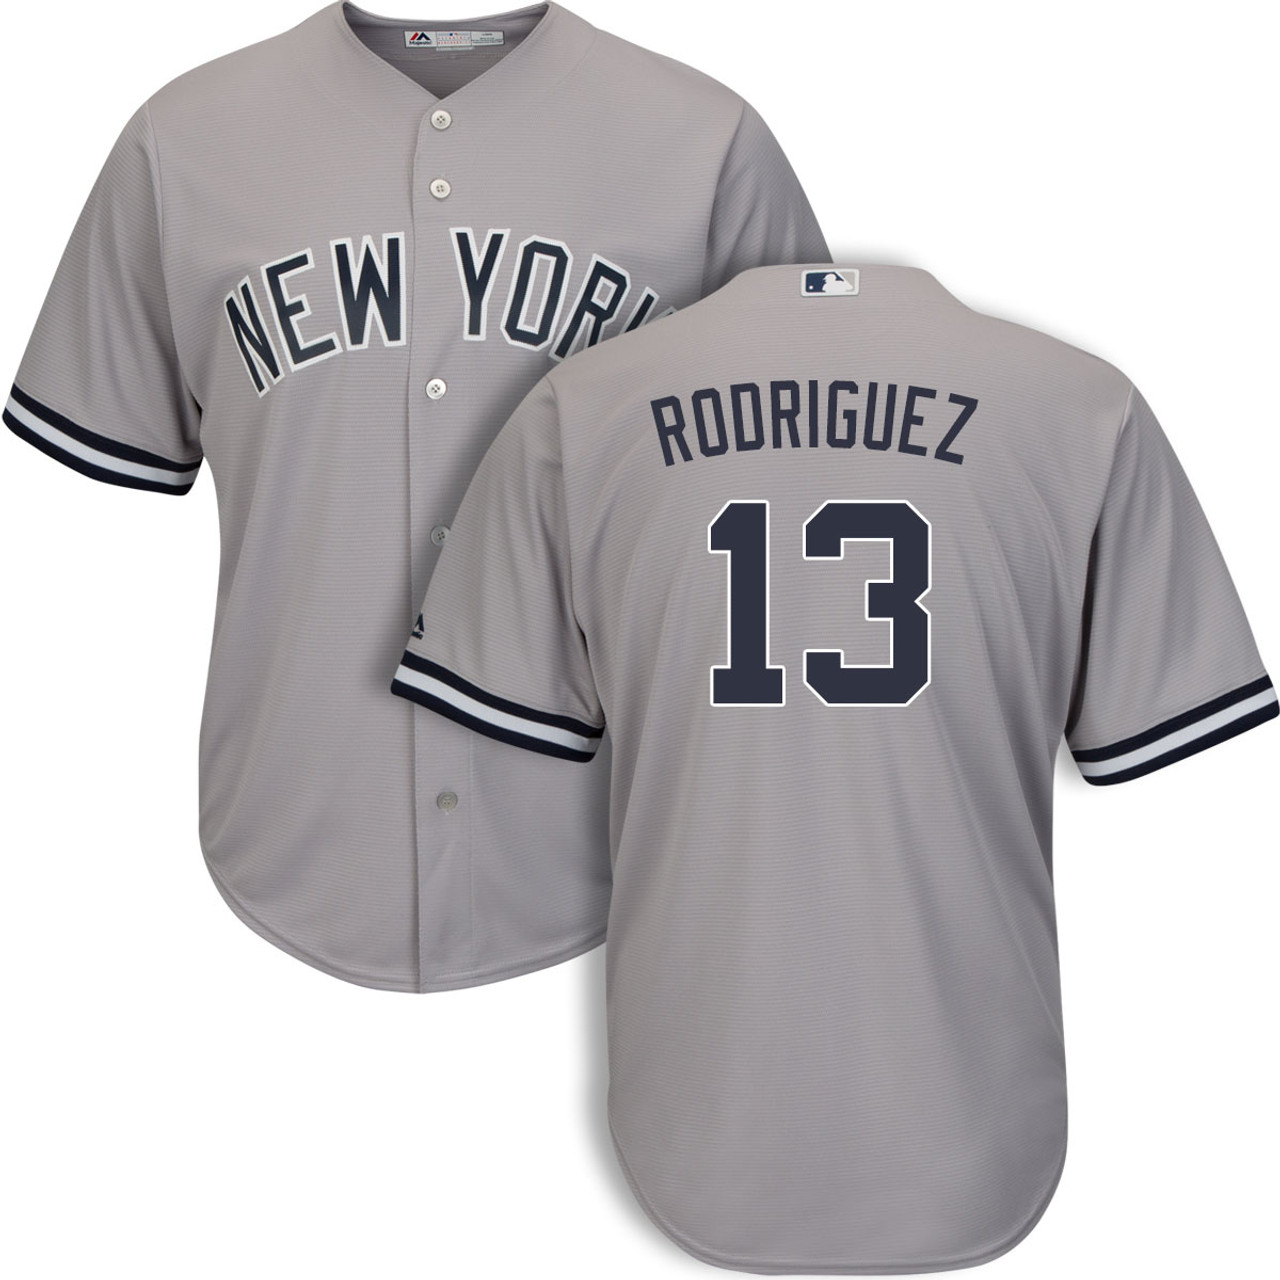 Men's New York Yankees Majestic Alex Rodriguez Road Jersey